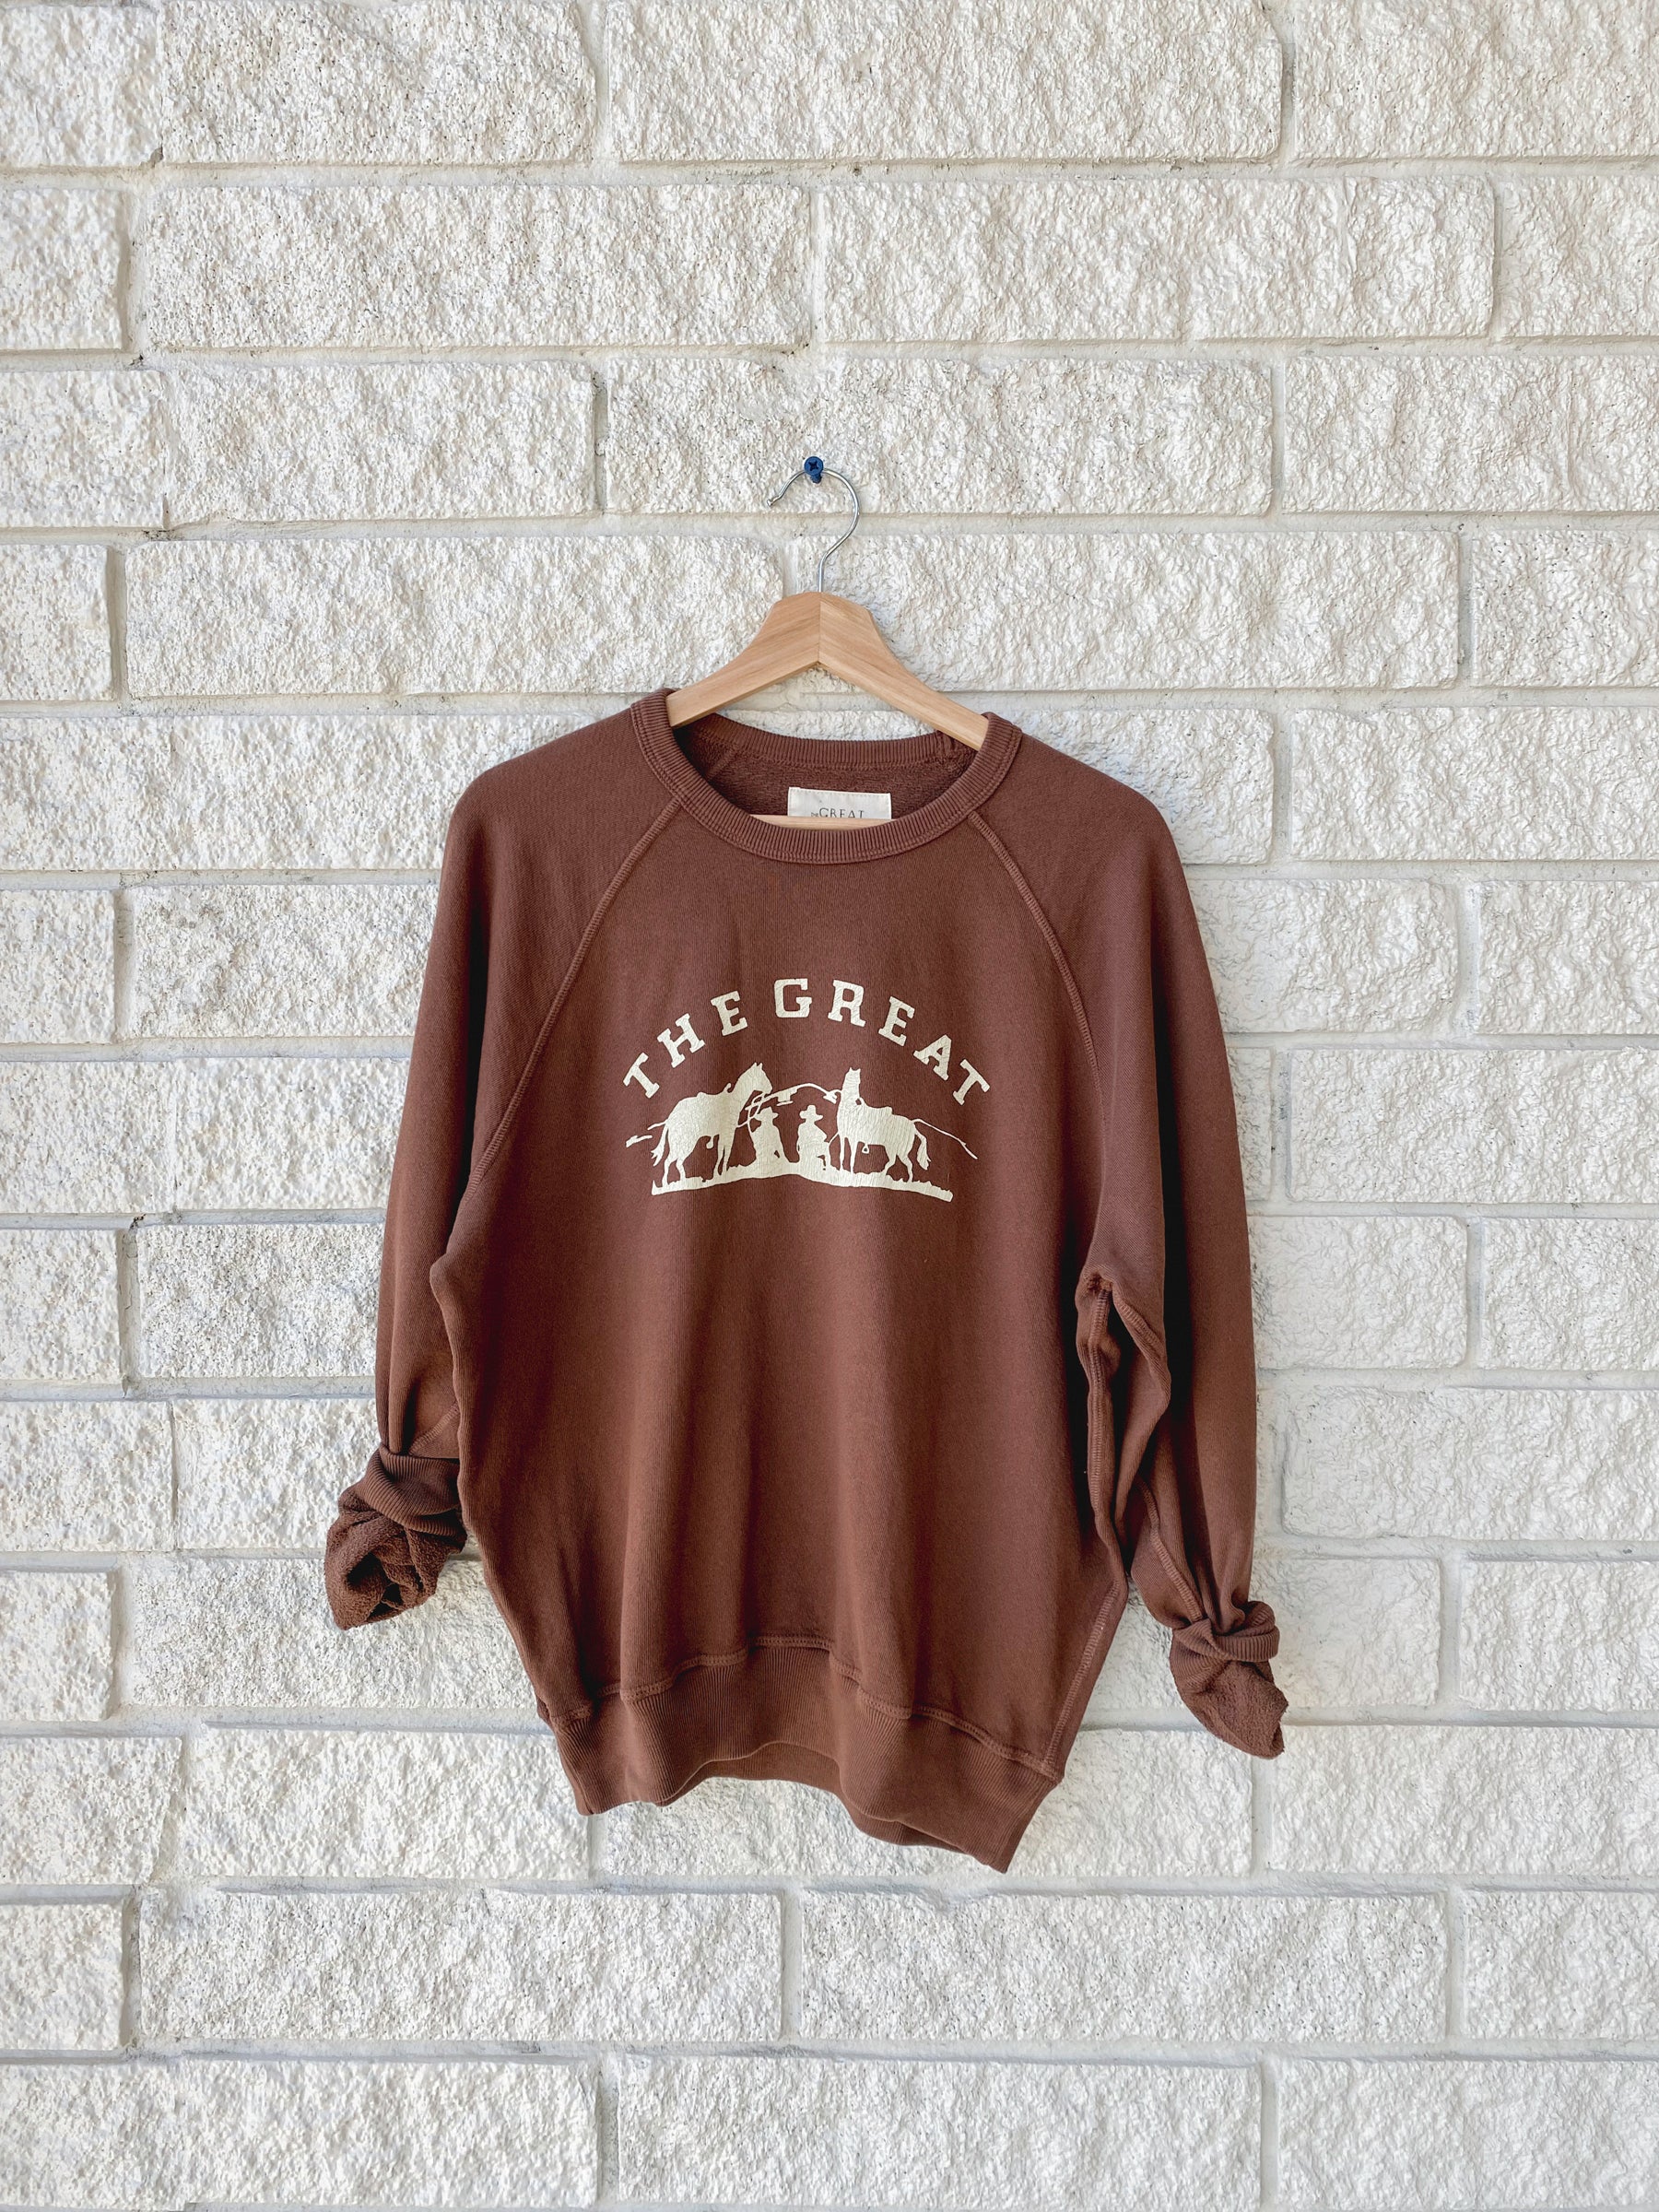 The College Sweatshirt W/ Gaucho Graphic